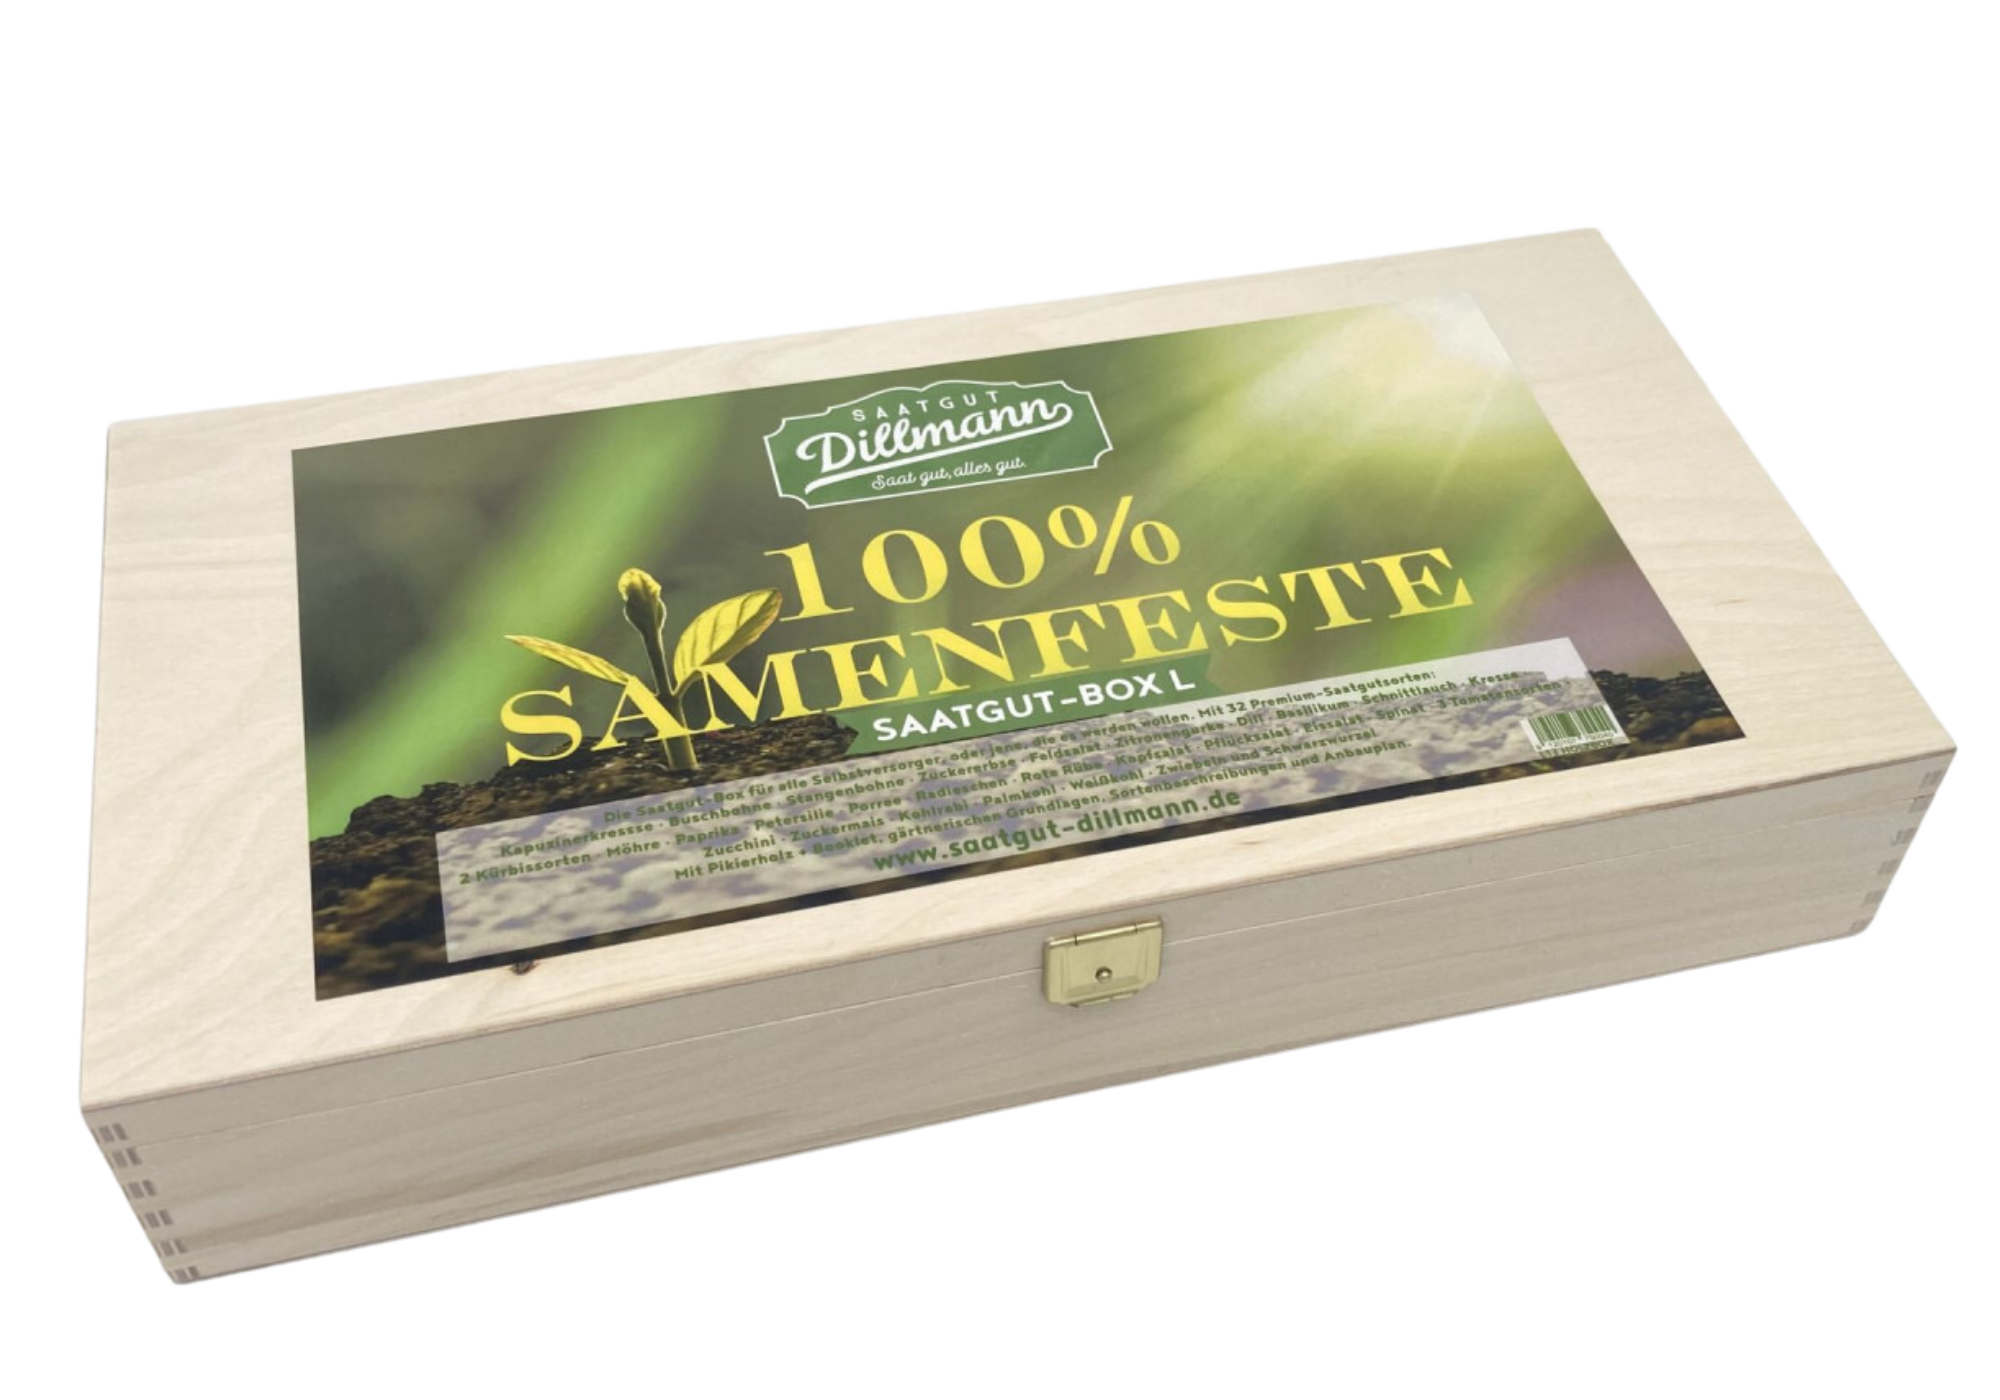 Saatgut-Box aus Holz: "100% Samenfest"